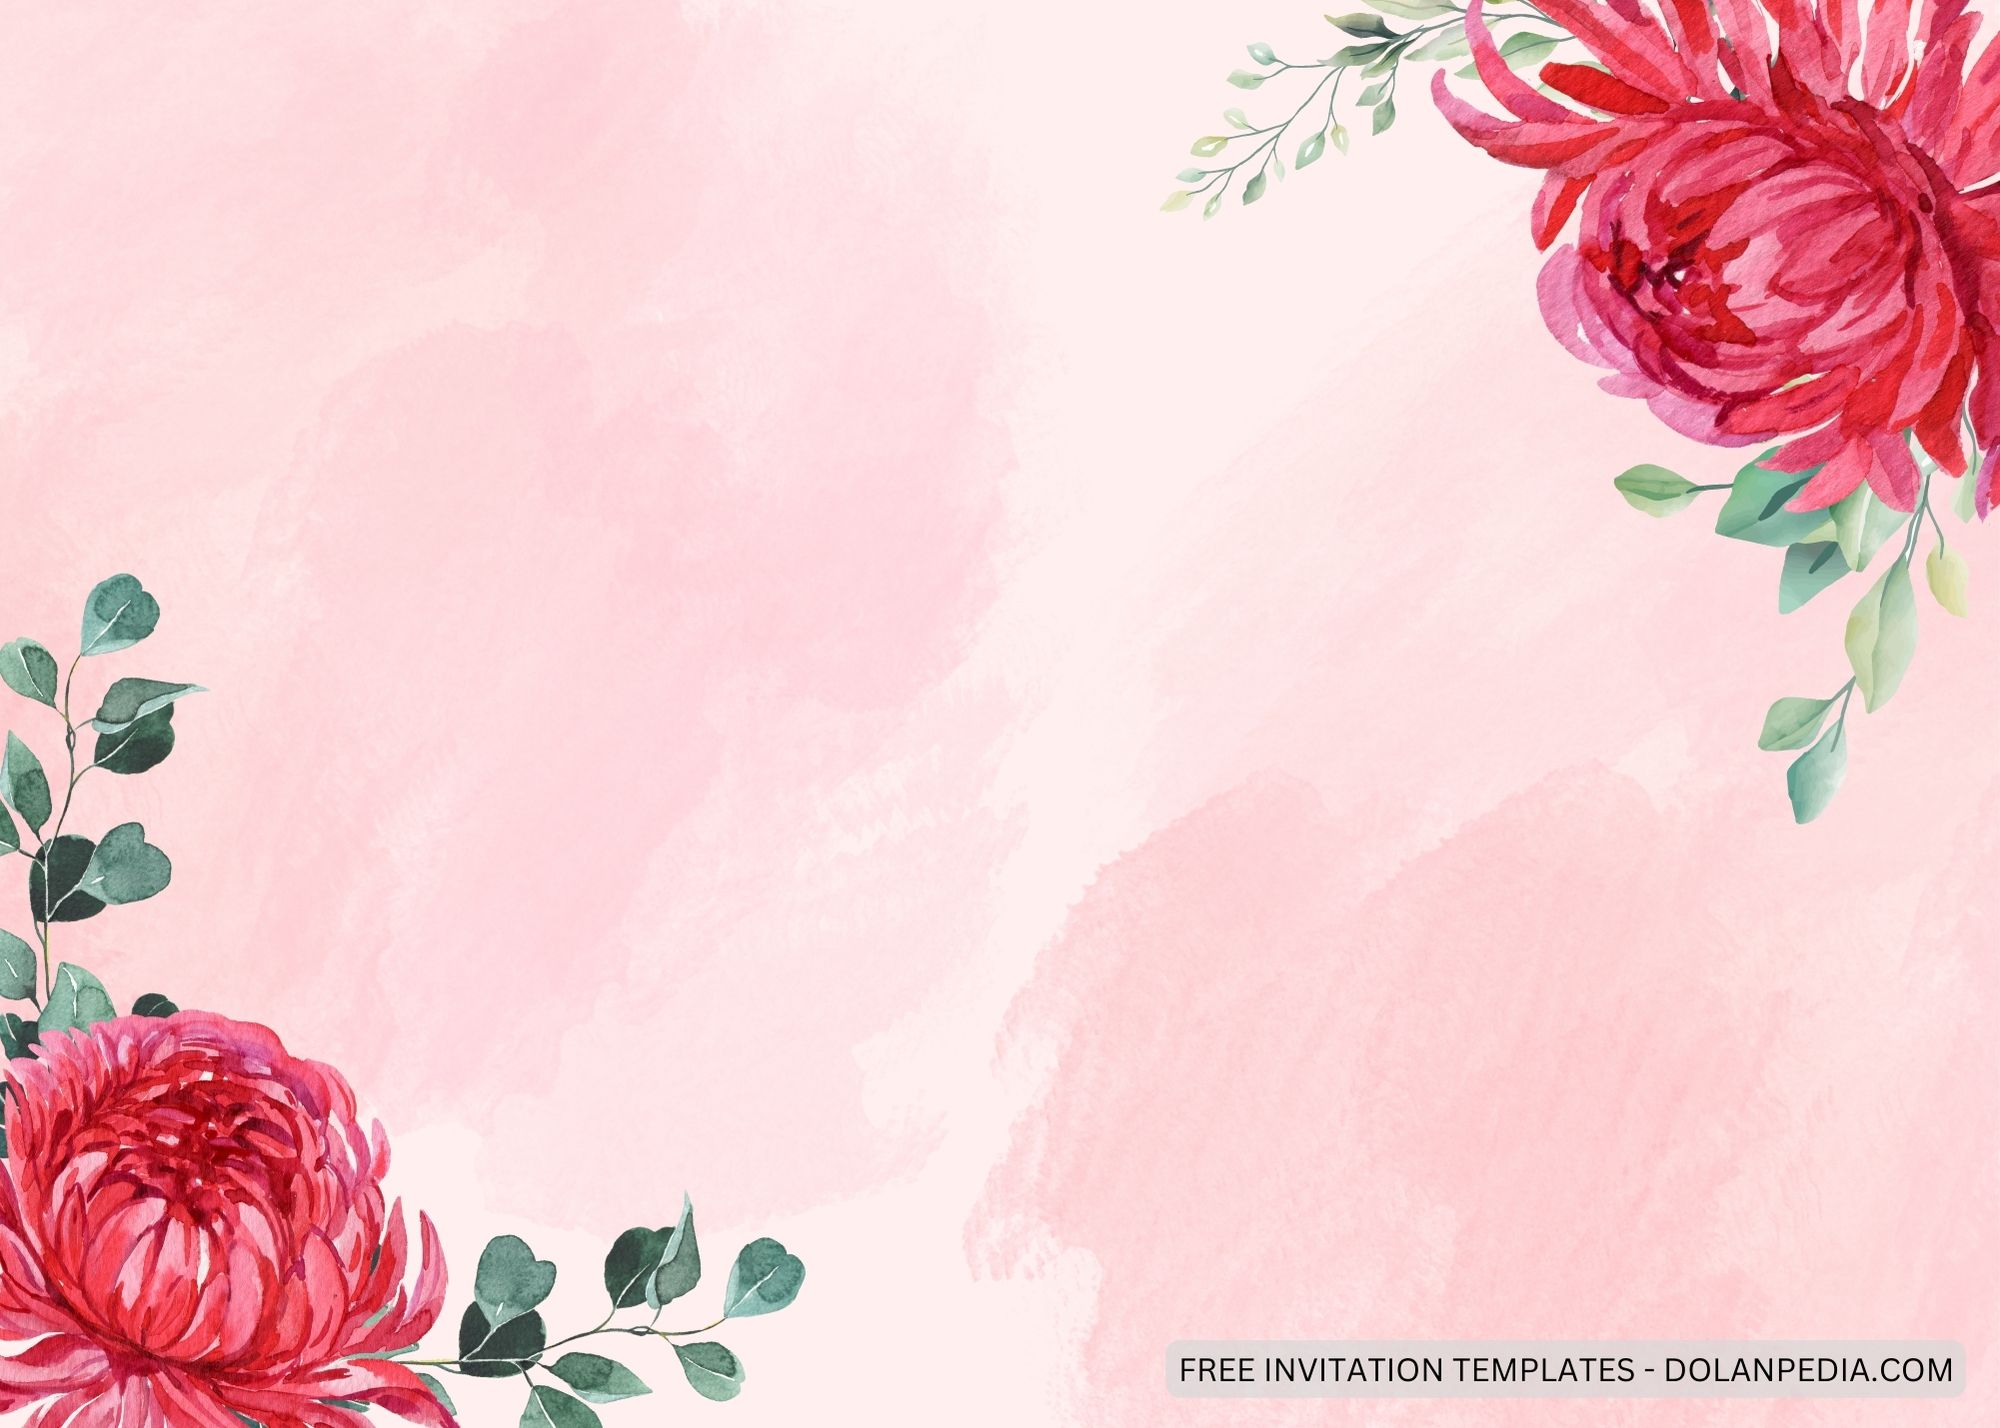 Blank Red Chrysantemum Baby Shower Invitation Templates Three